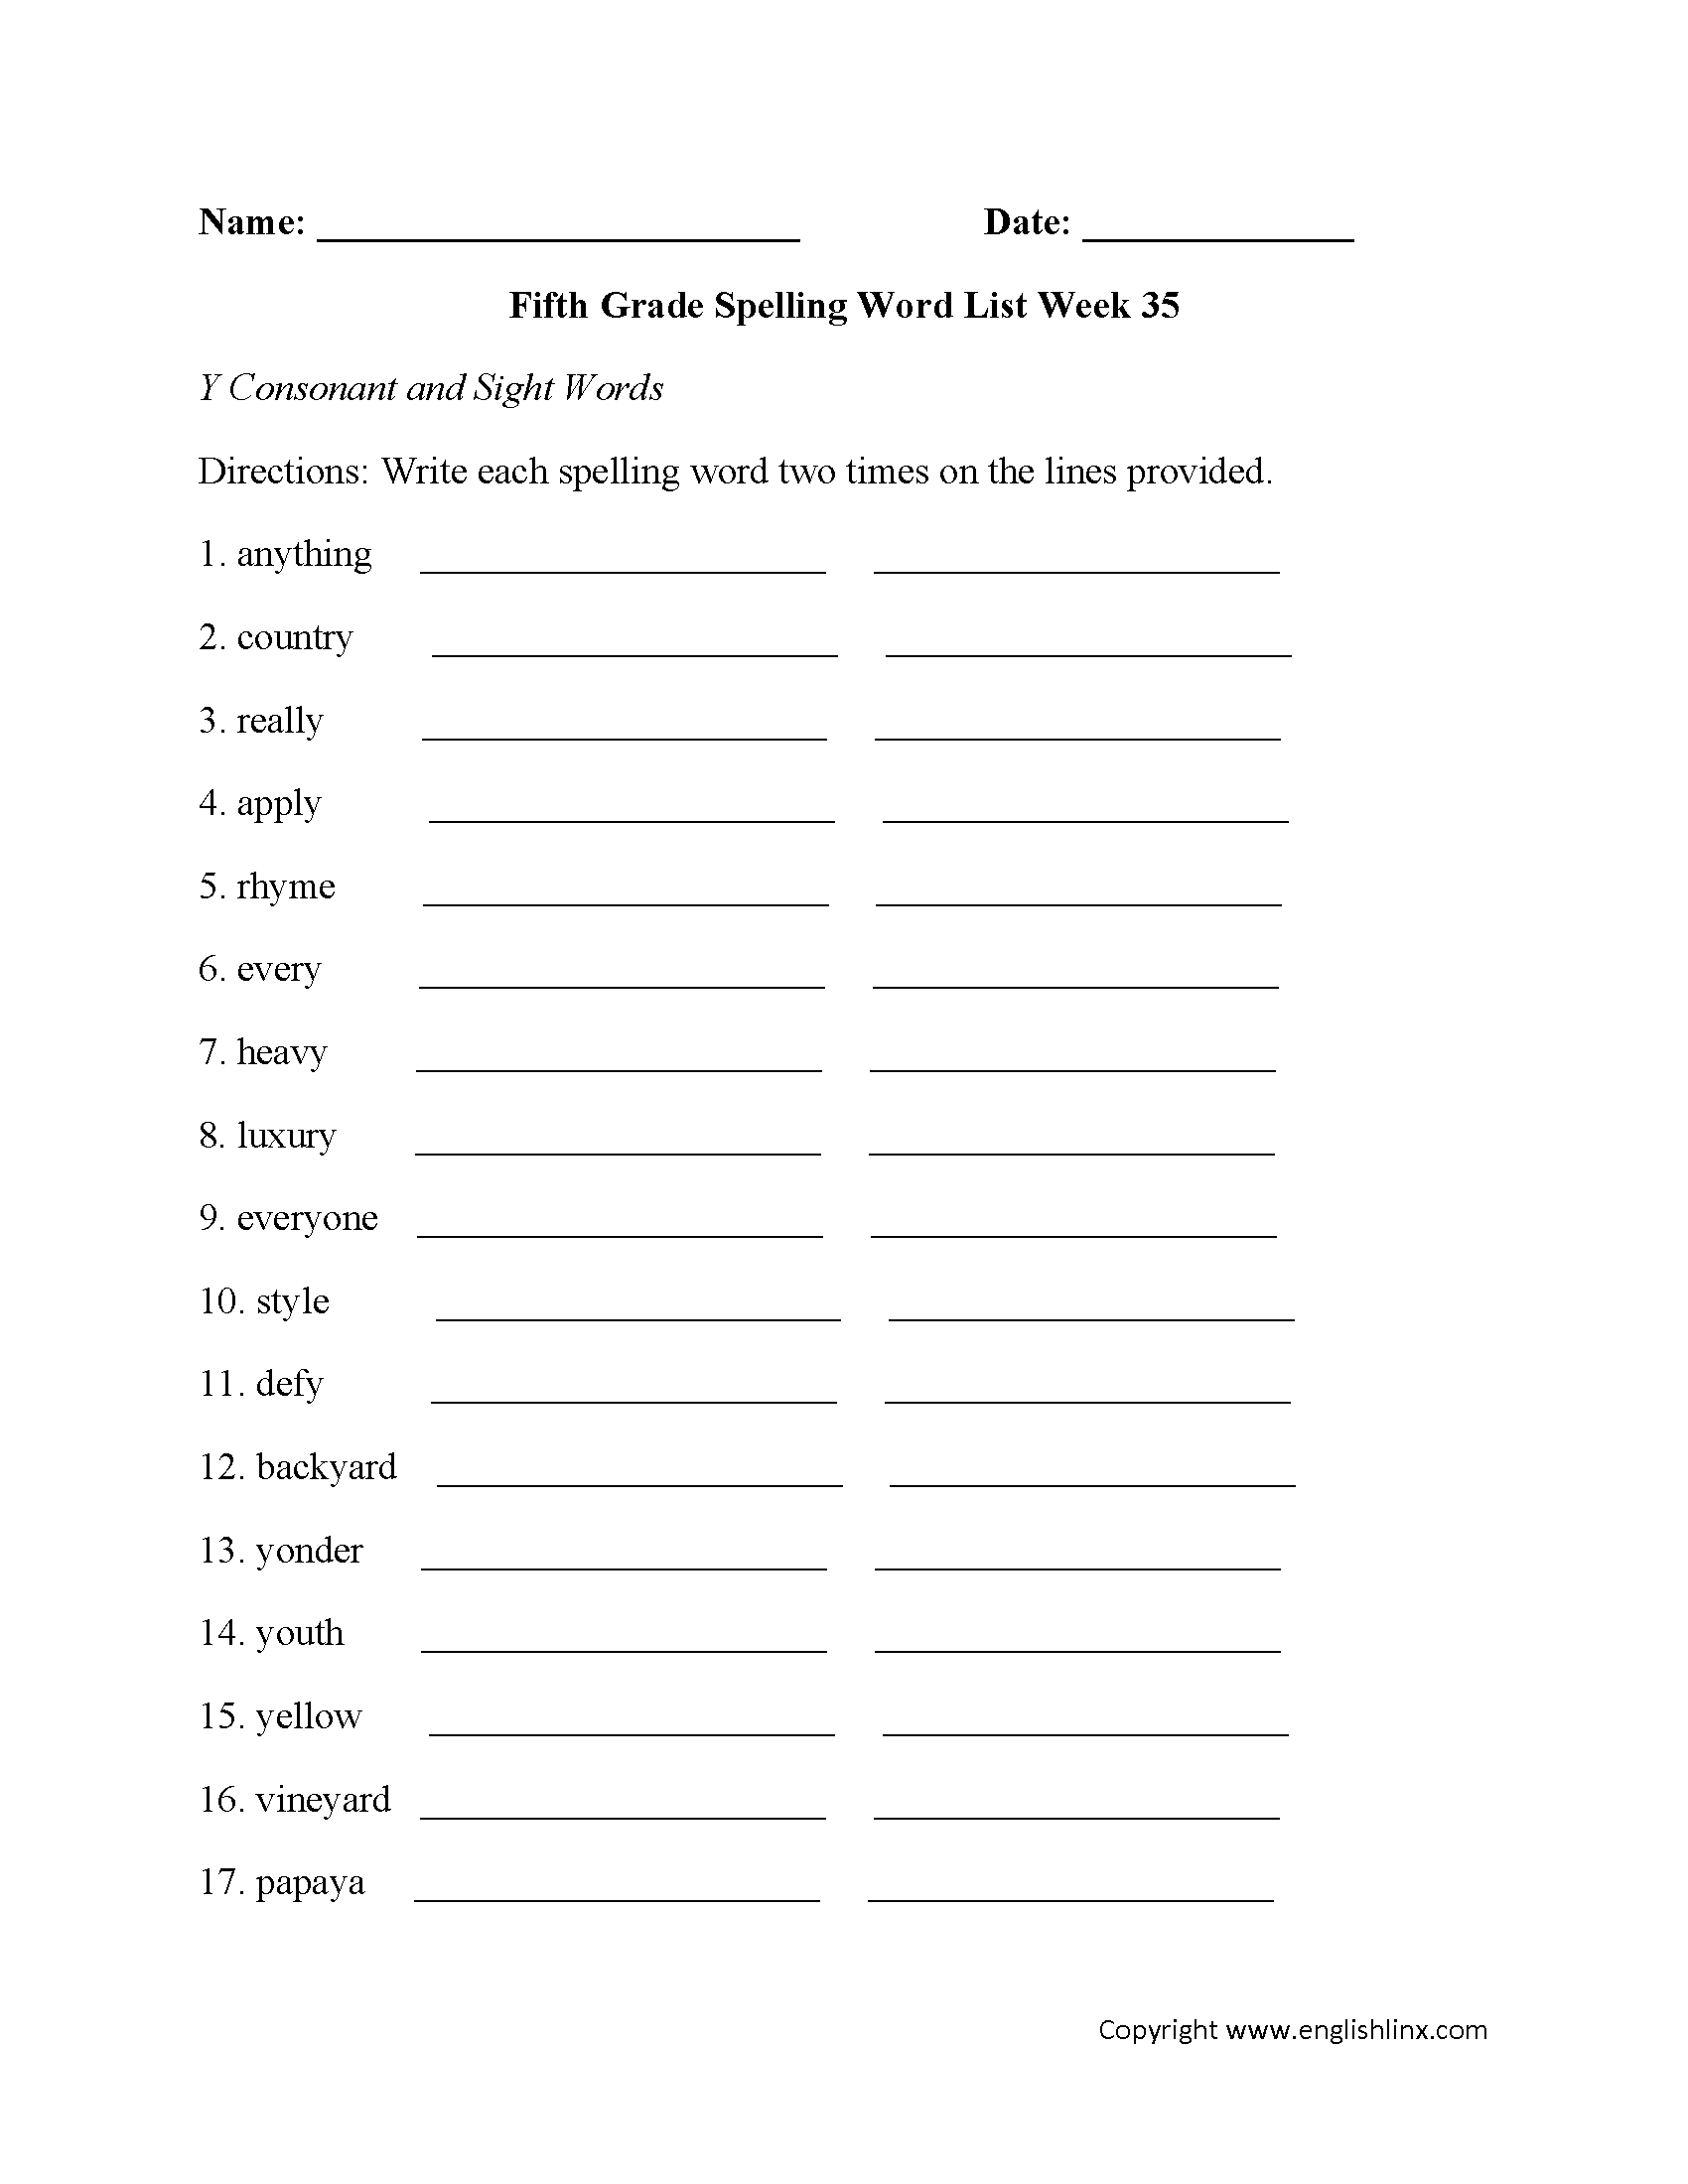 Week 35 Y Consonant and Sight Words Fifth Grade Spelling Words Worksheets